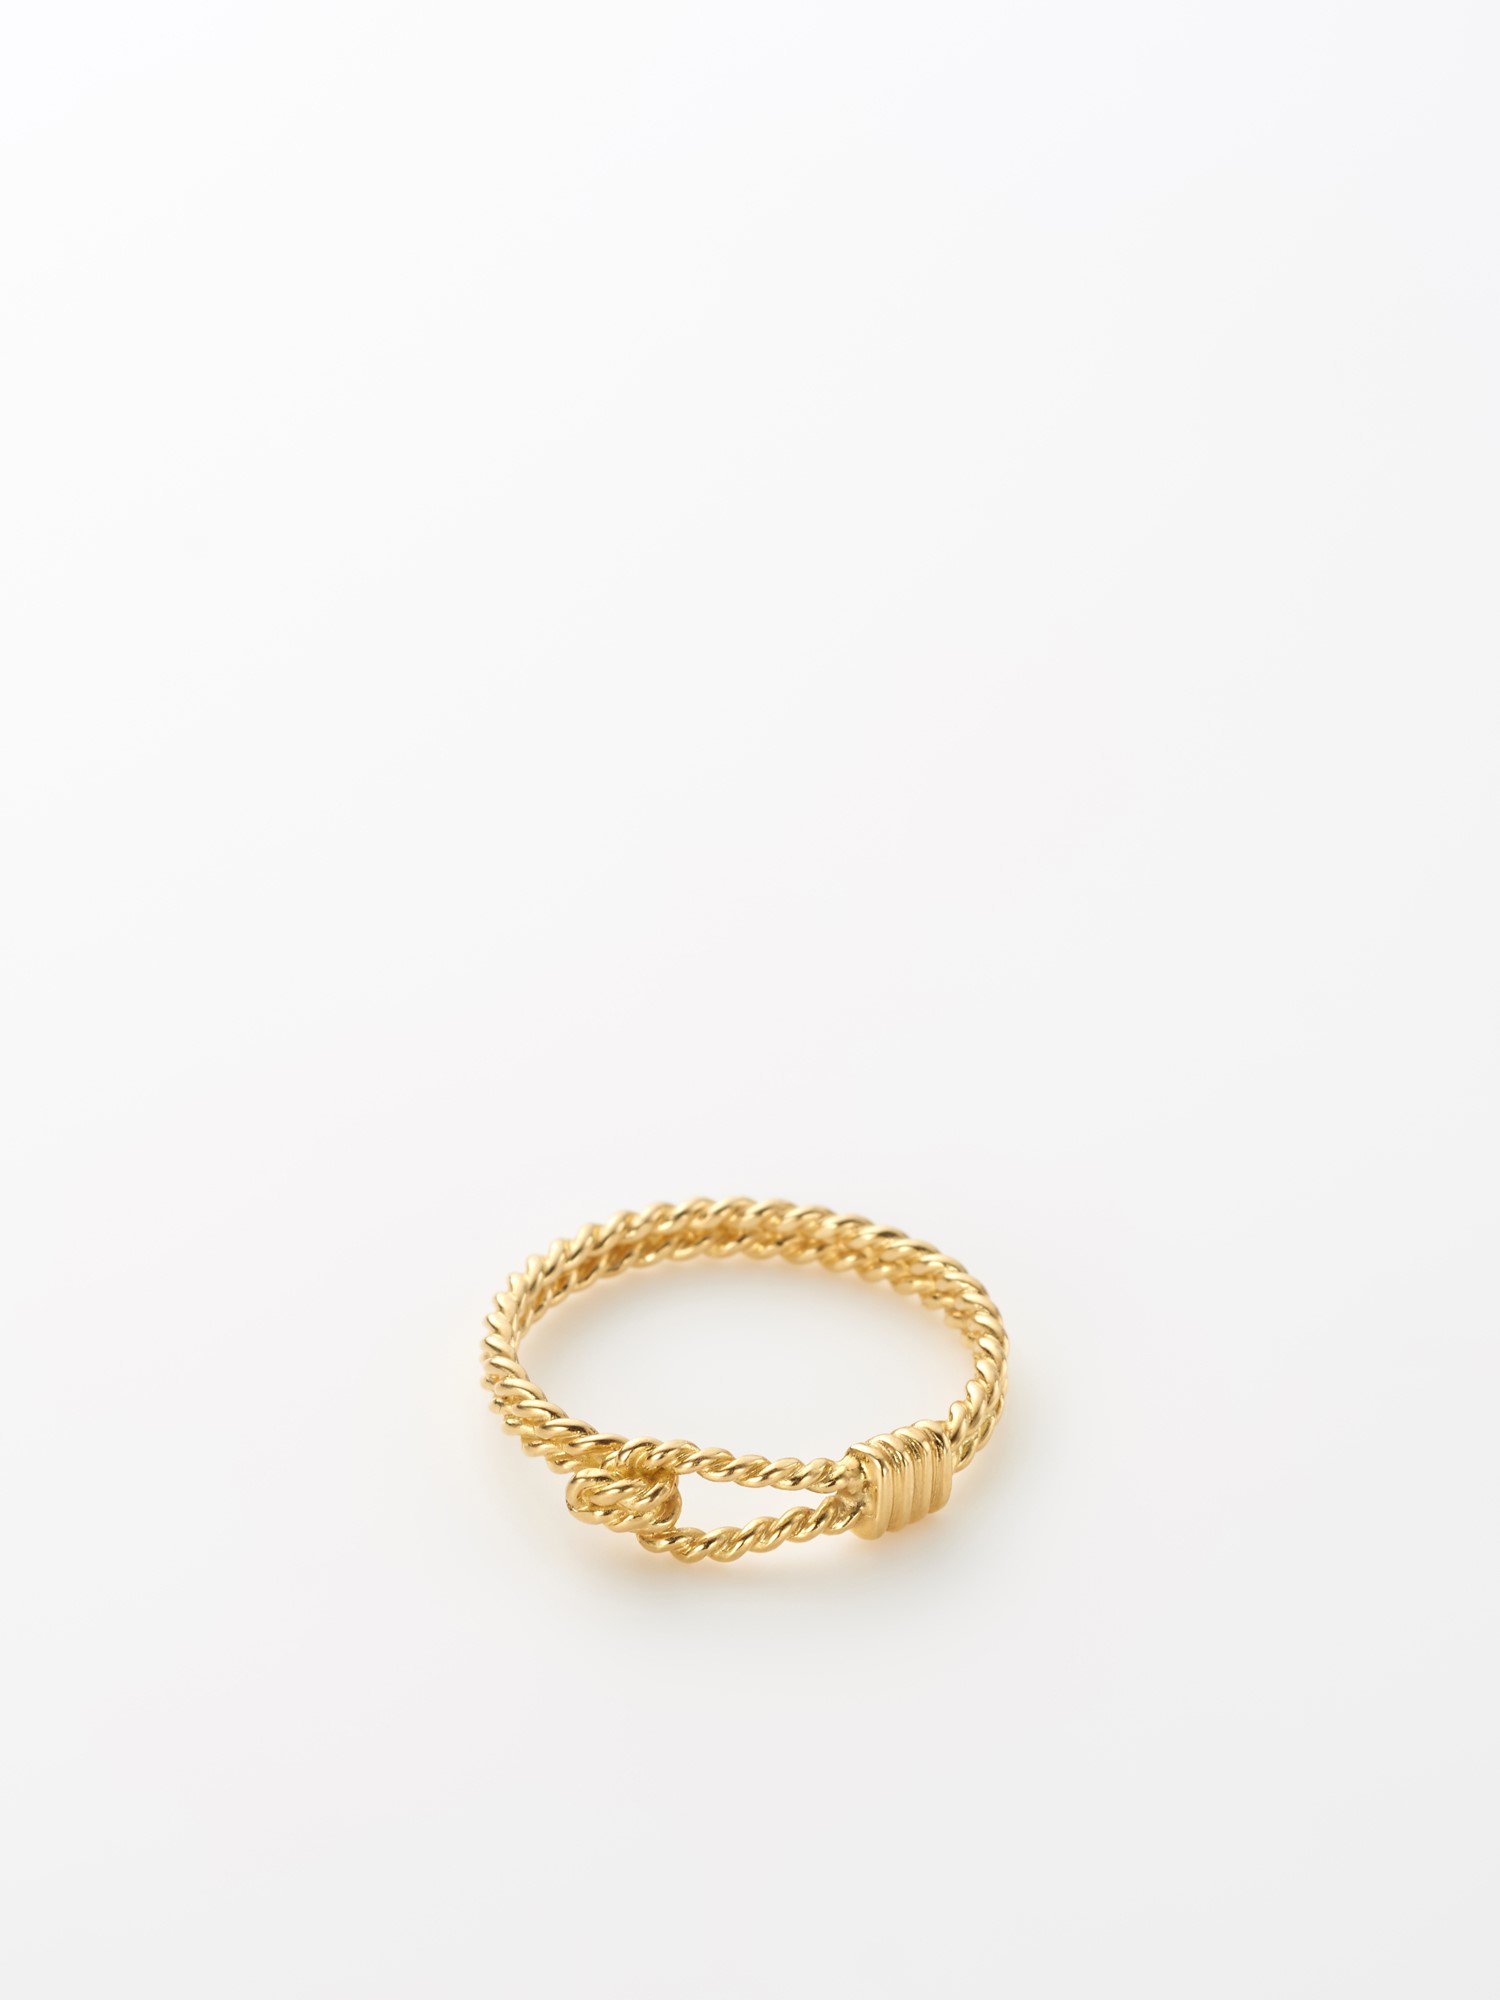 AMOUR / Infinity ring - GIGI Jewelry